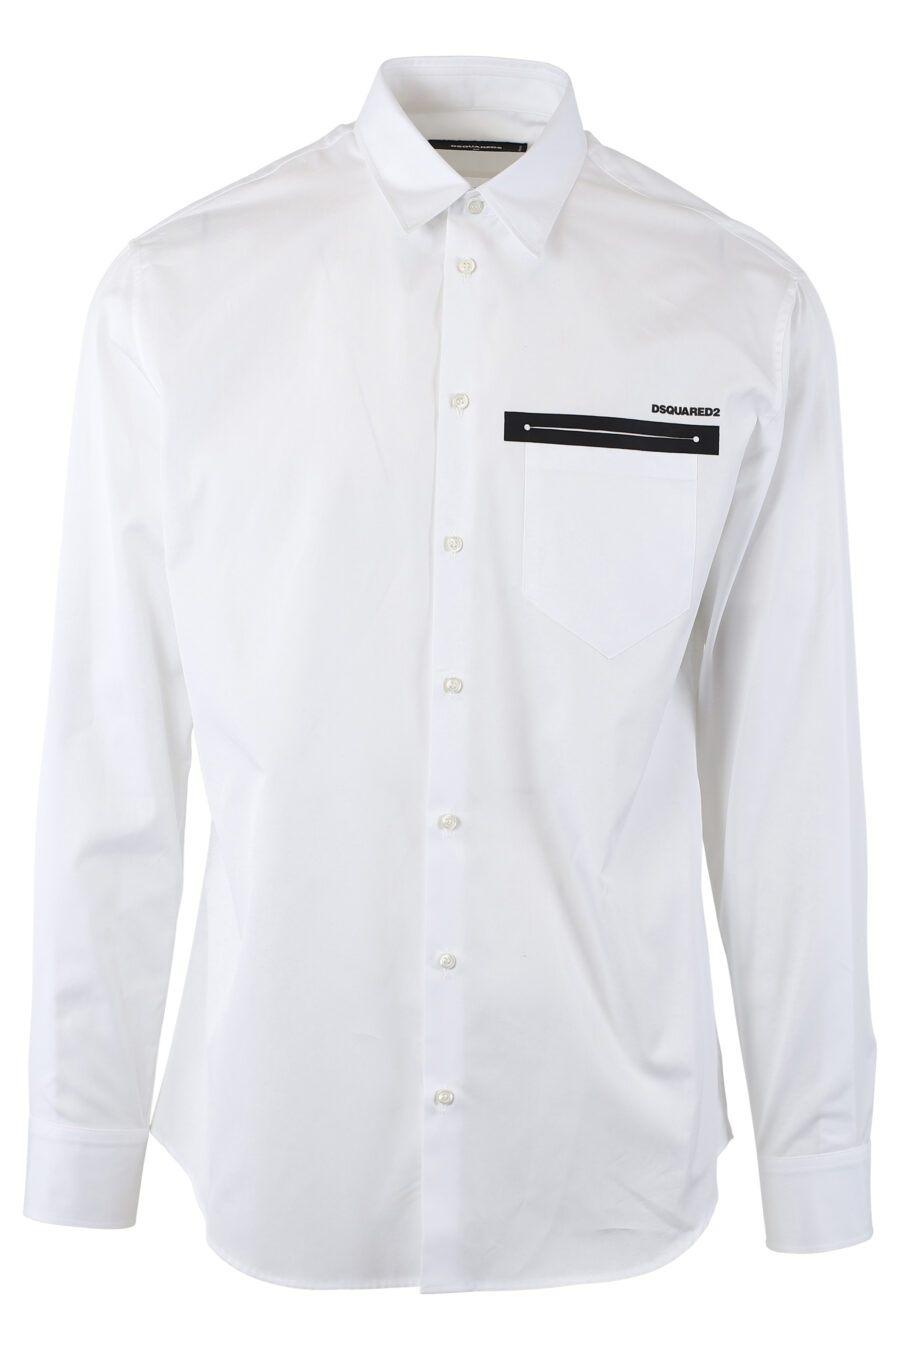 Camisa blanca con minilogo cremallera - IMG 1116